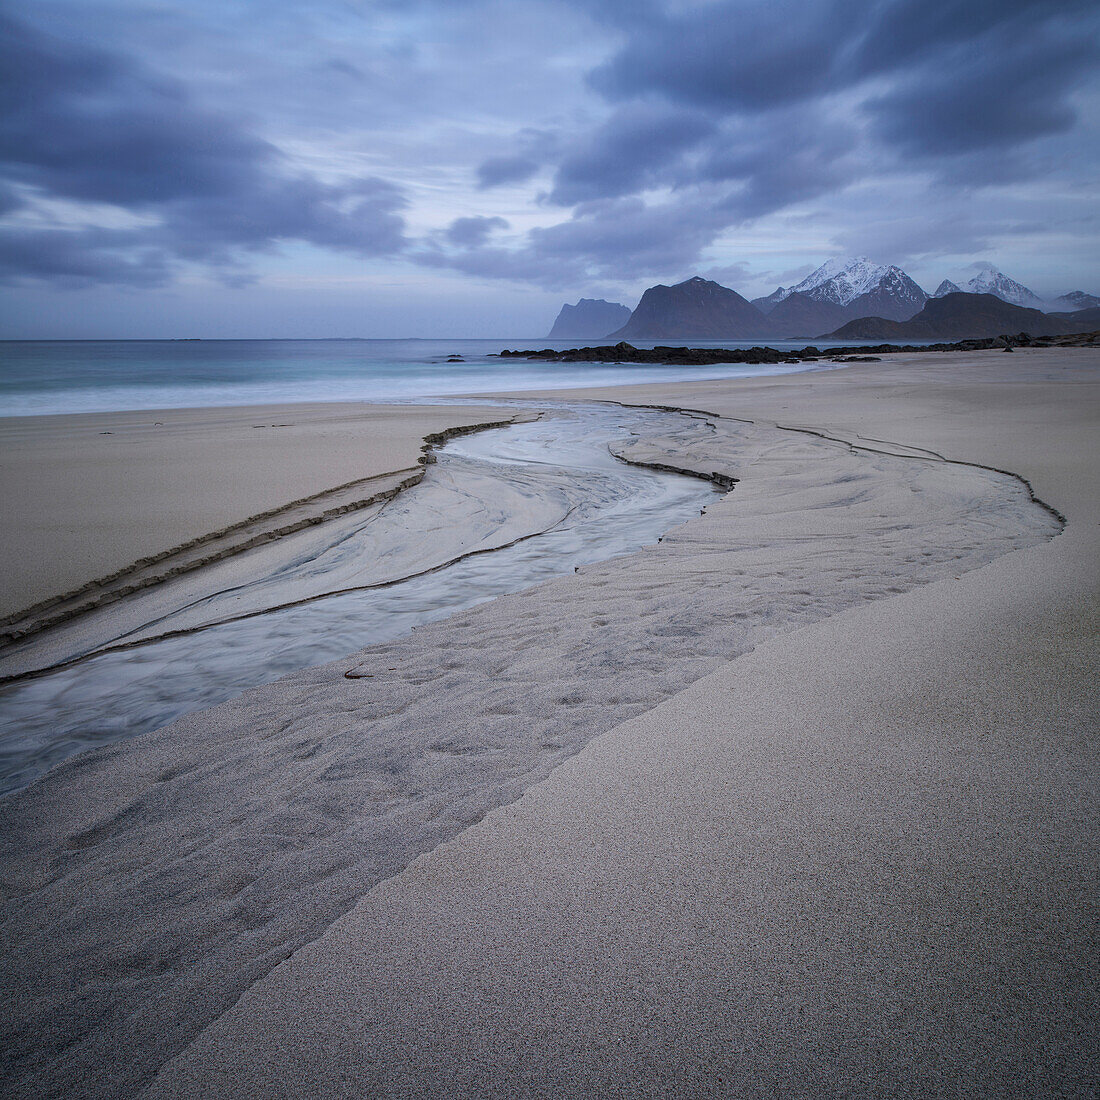 A small river runs through the sand at Storsandnes beach, Flakstad??y, Lofoten Islands, Norway